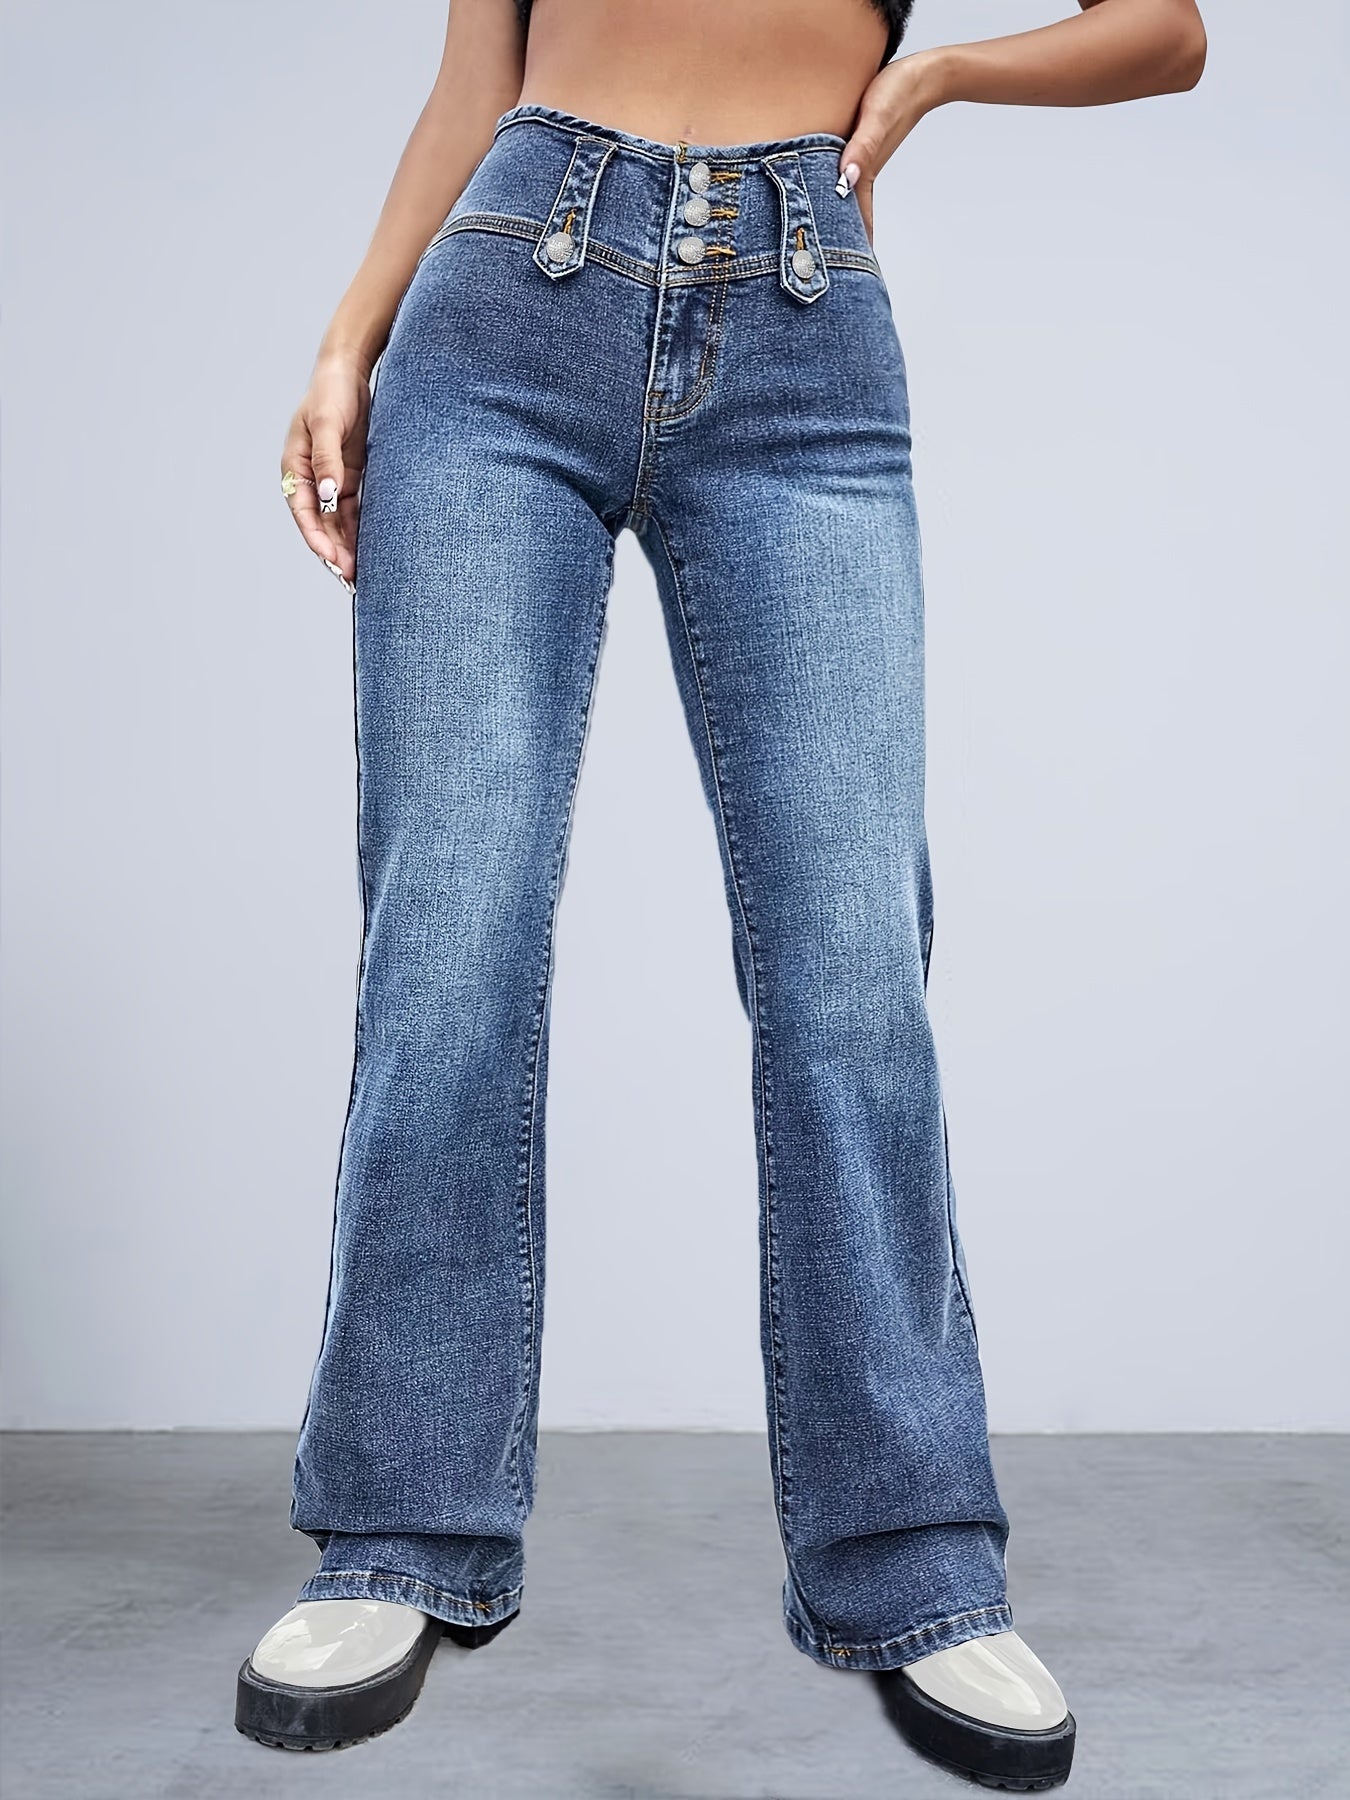 「binfenxie」Blue High Waist Flared Jeans, Bell Bottom High Rise Wide Legs High-Stretch Denim Pants, Women's Denim Jeans & Clothing